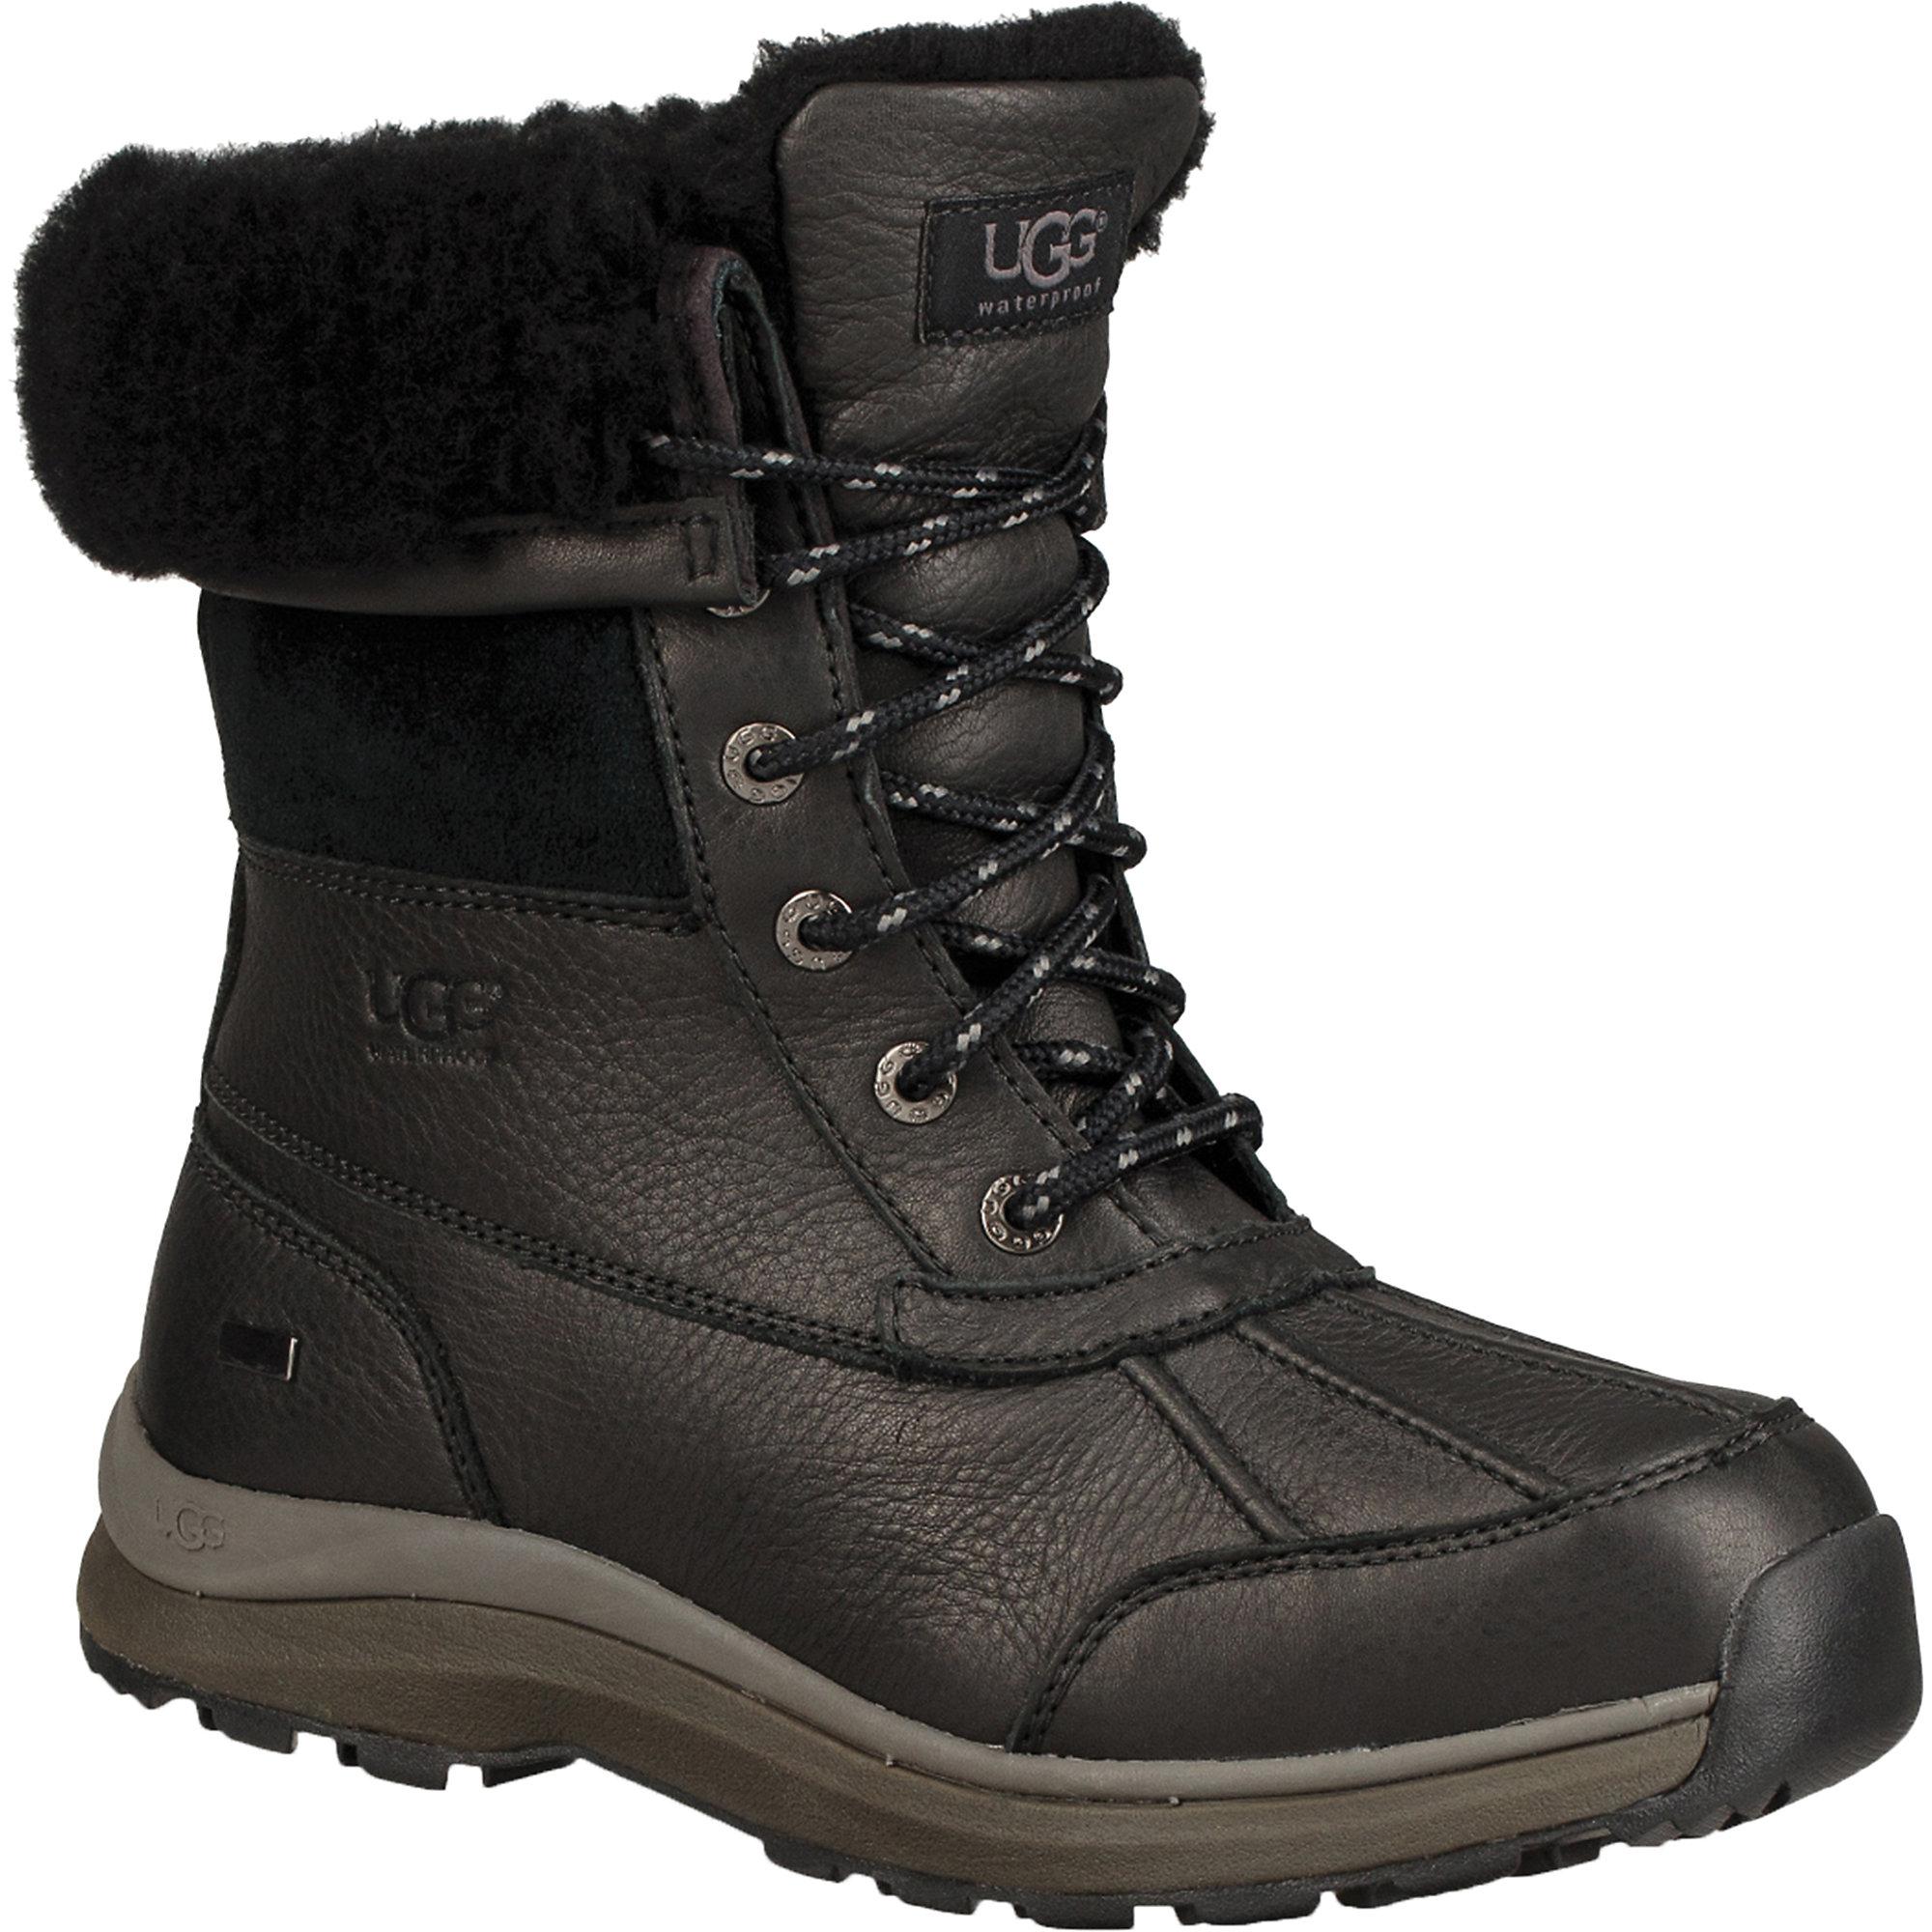 UGG Lace Adirondack Boot Iii in Black - Lyst